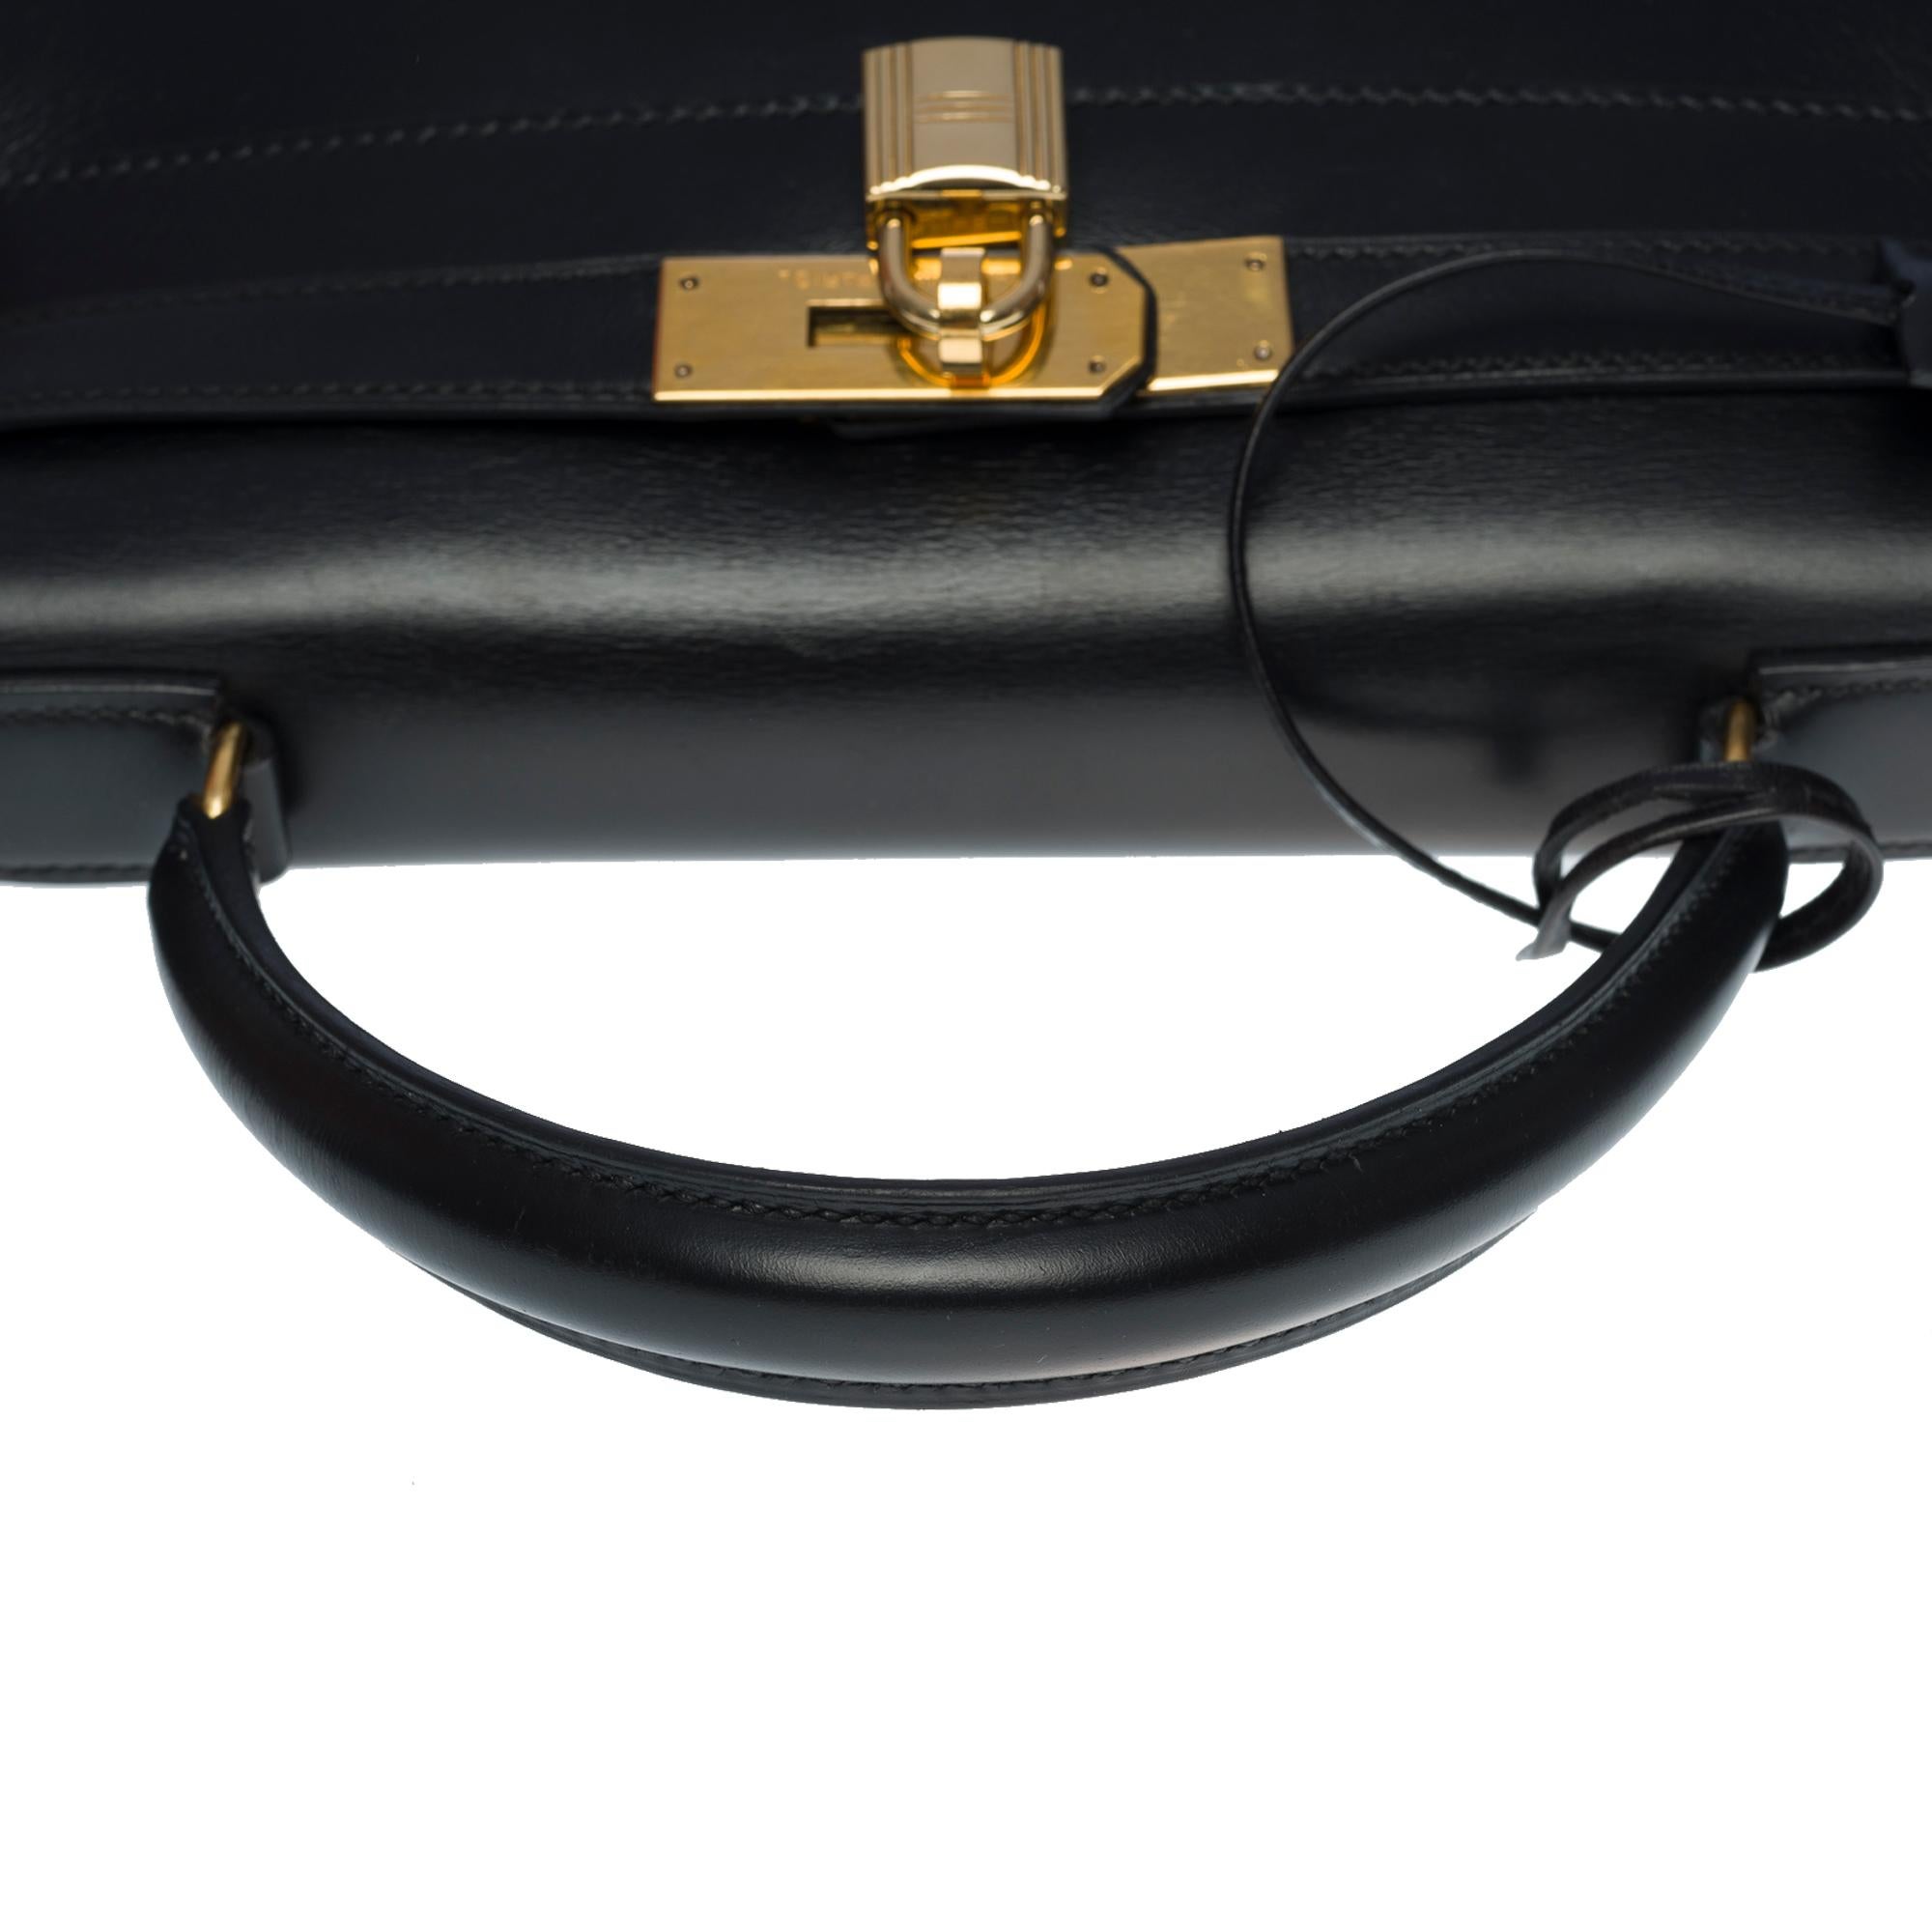 Gorgeous Hermes Kelly 28 sellier handbag strap in black box calf leather, GHW 1